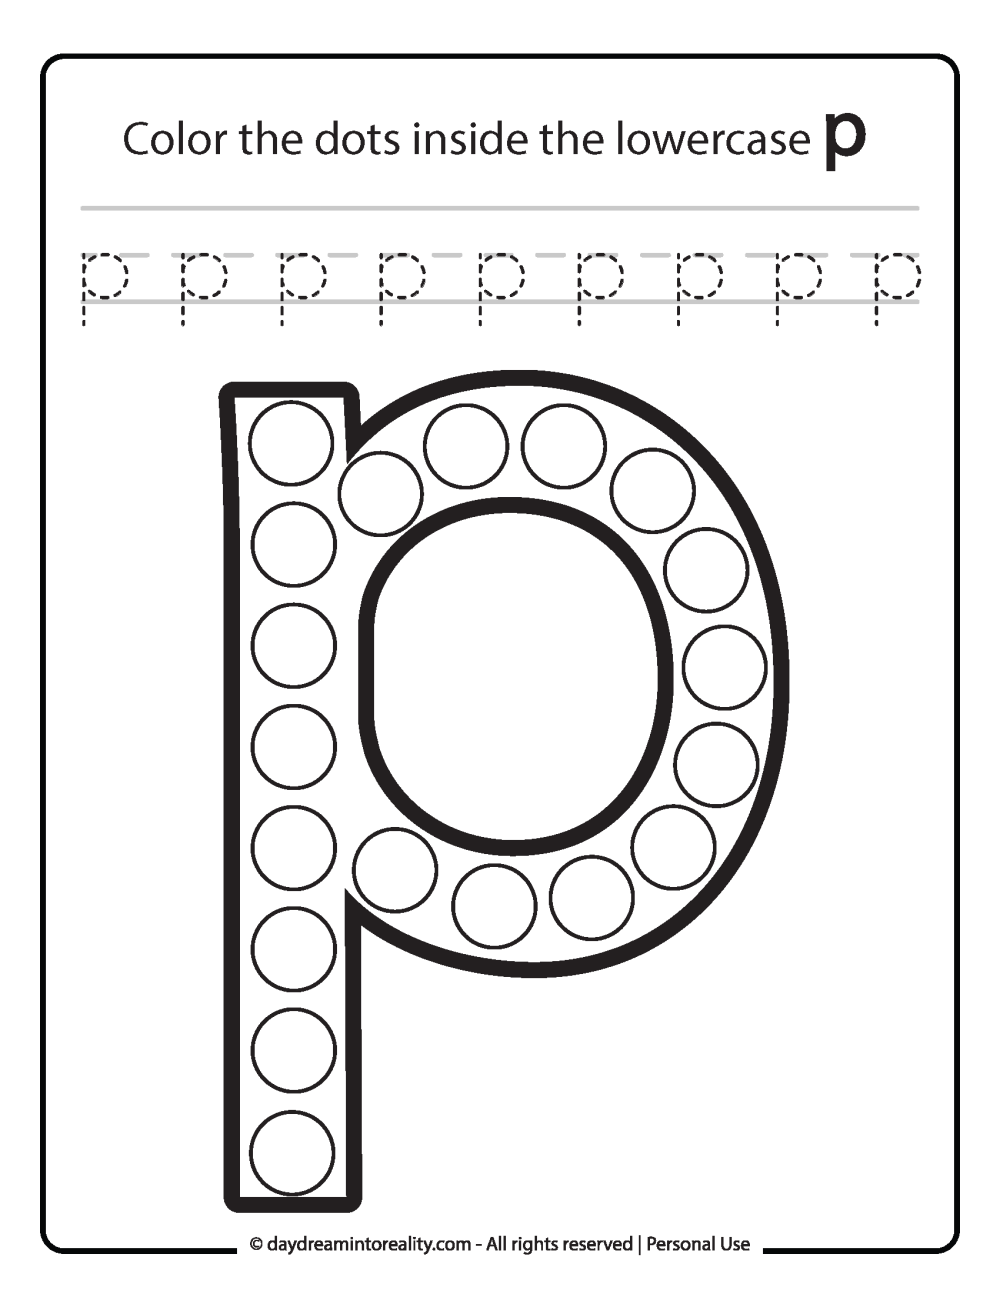 Lowercase "p" Dot Marker Worksheet Free Printable activity for kids (preschool, kindergarten)